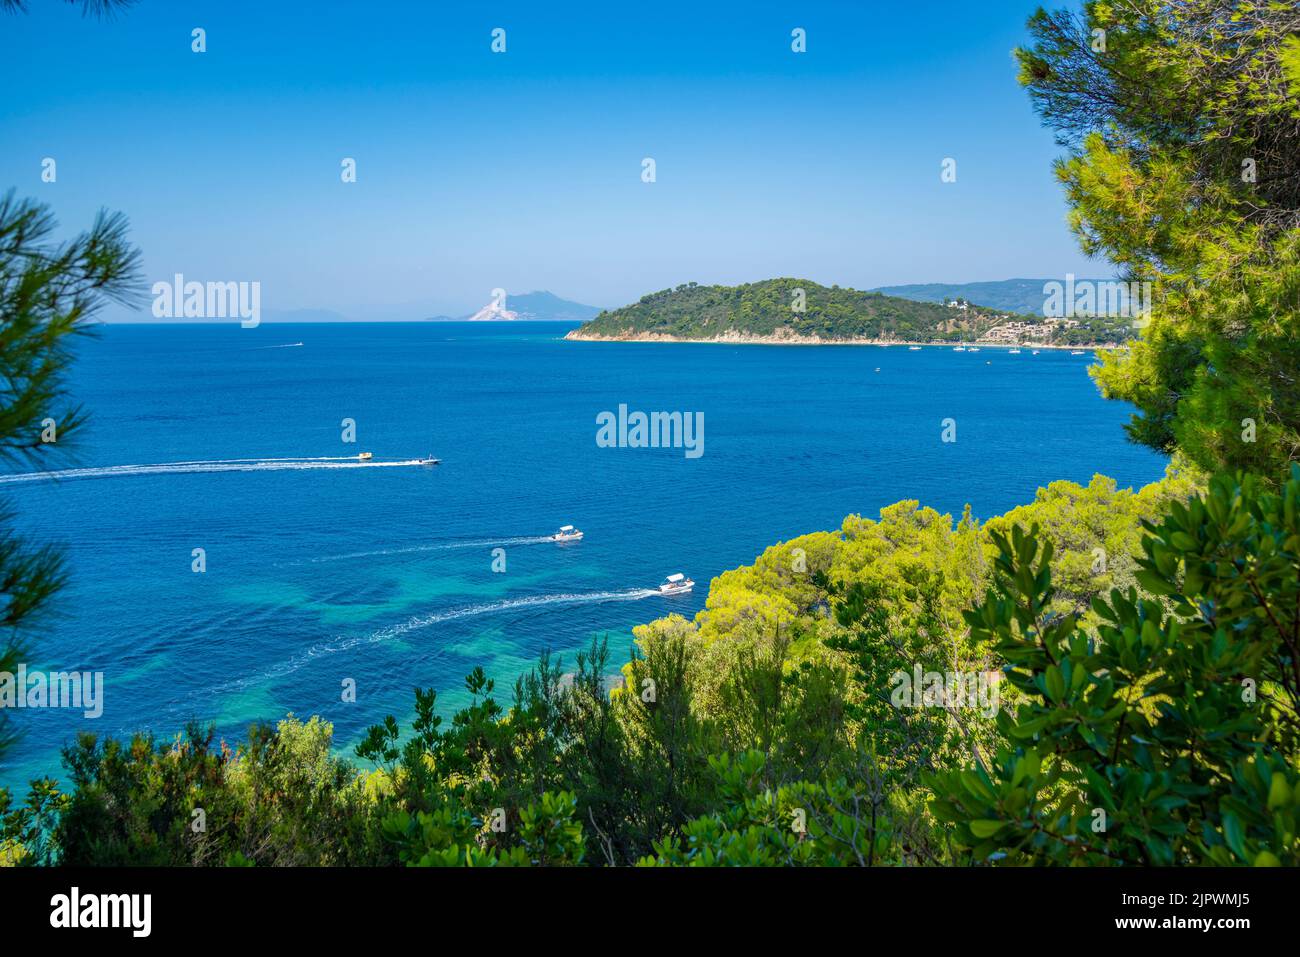 View of boats in the Aegean Sea and alpine coastline near Maratha Beach, Skiathos Island, Sporades Islands, Greek Islands, Greece, Europe Stock Photo